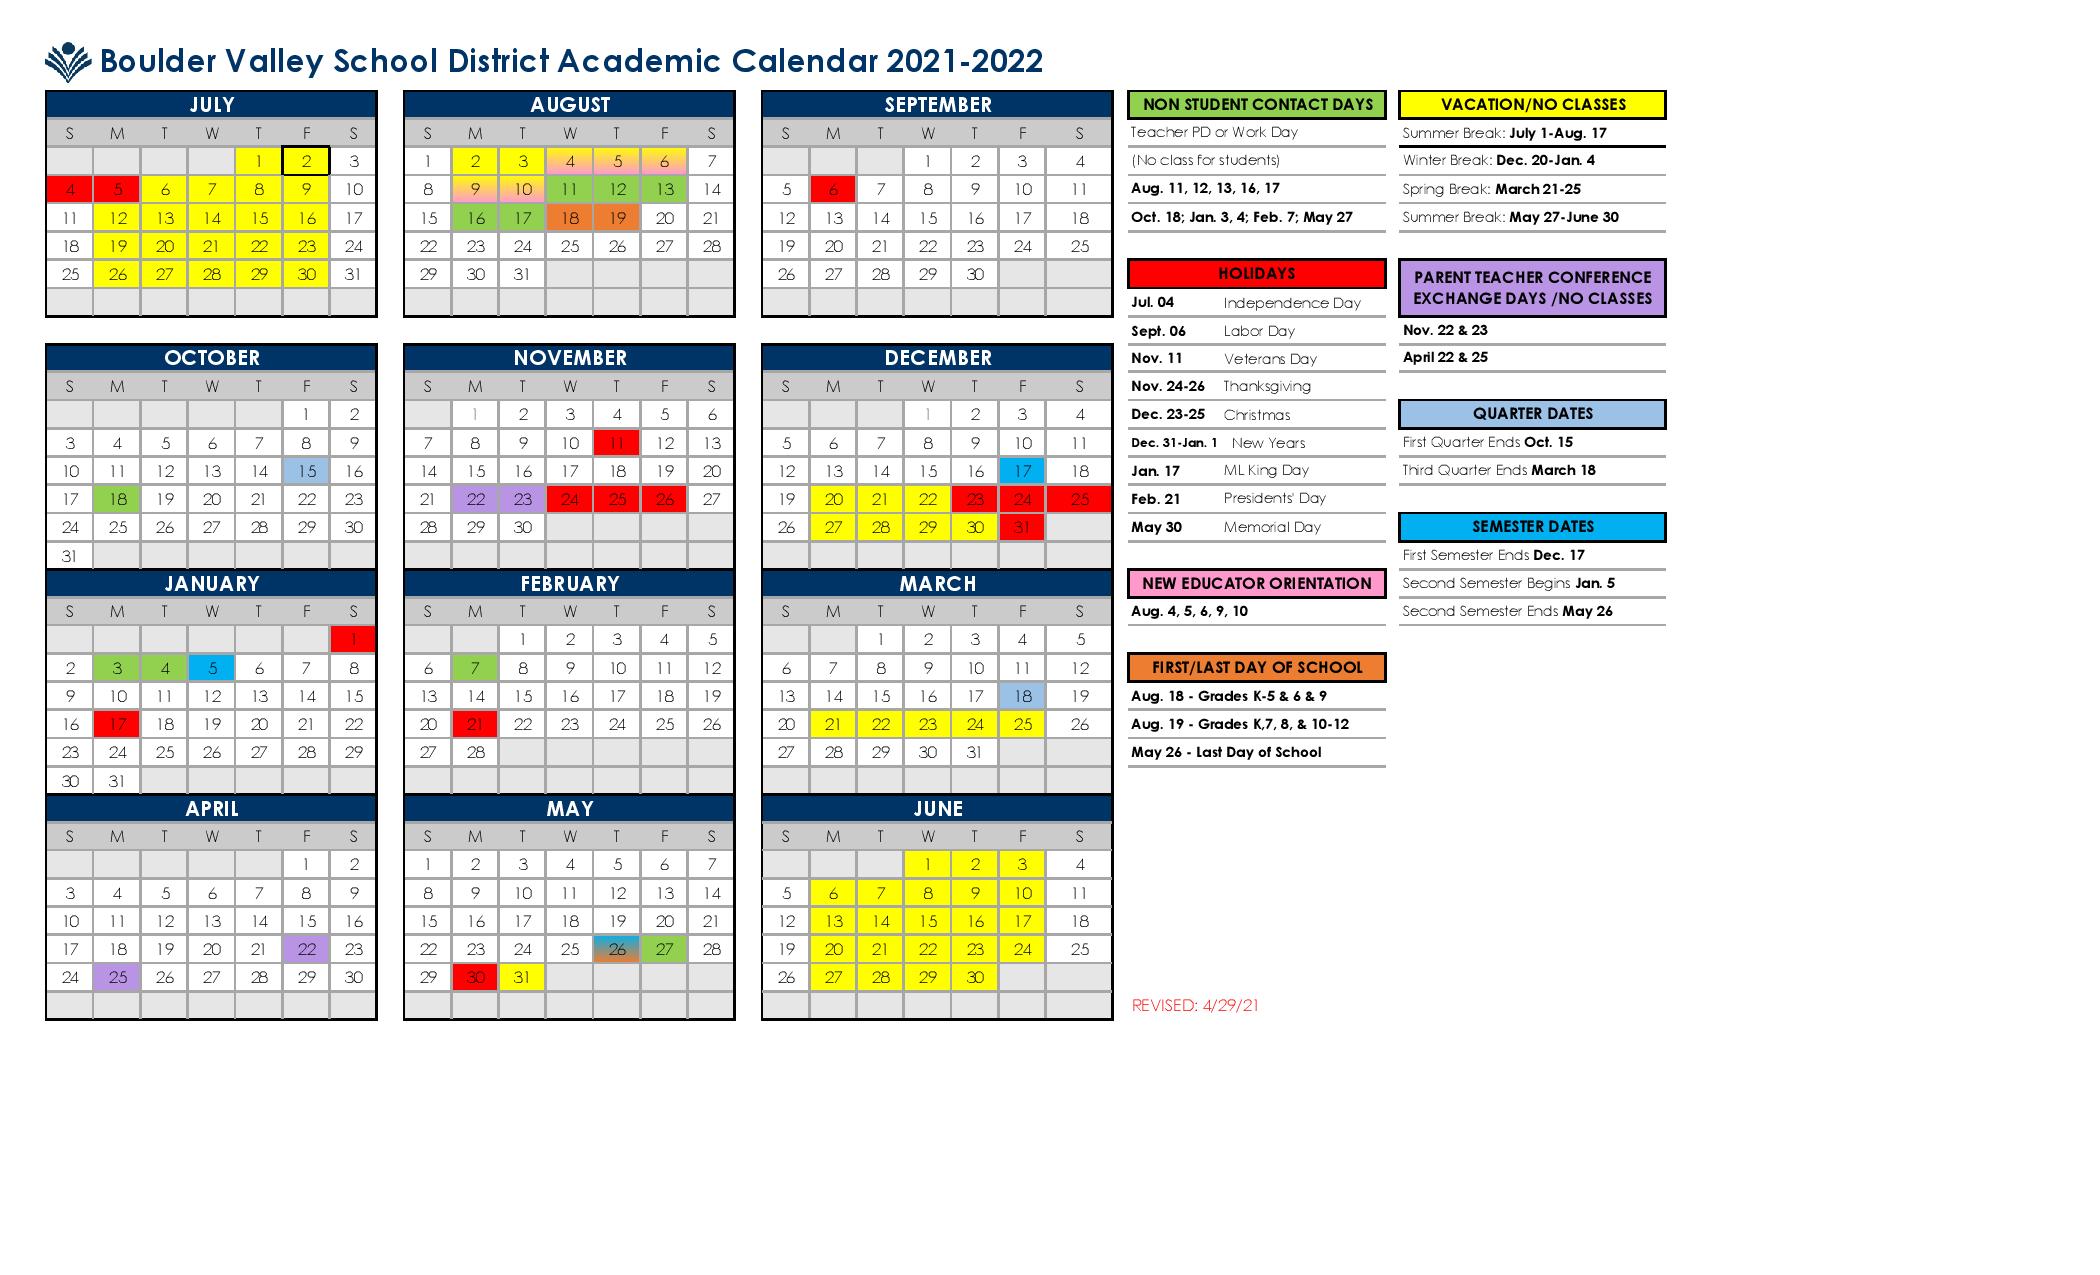 Boulder Valley School Calendar 20222023 academic calendar 2022